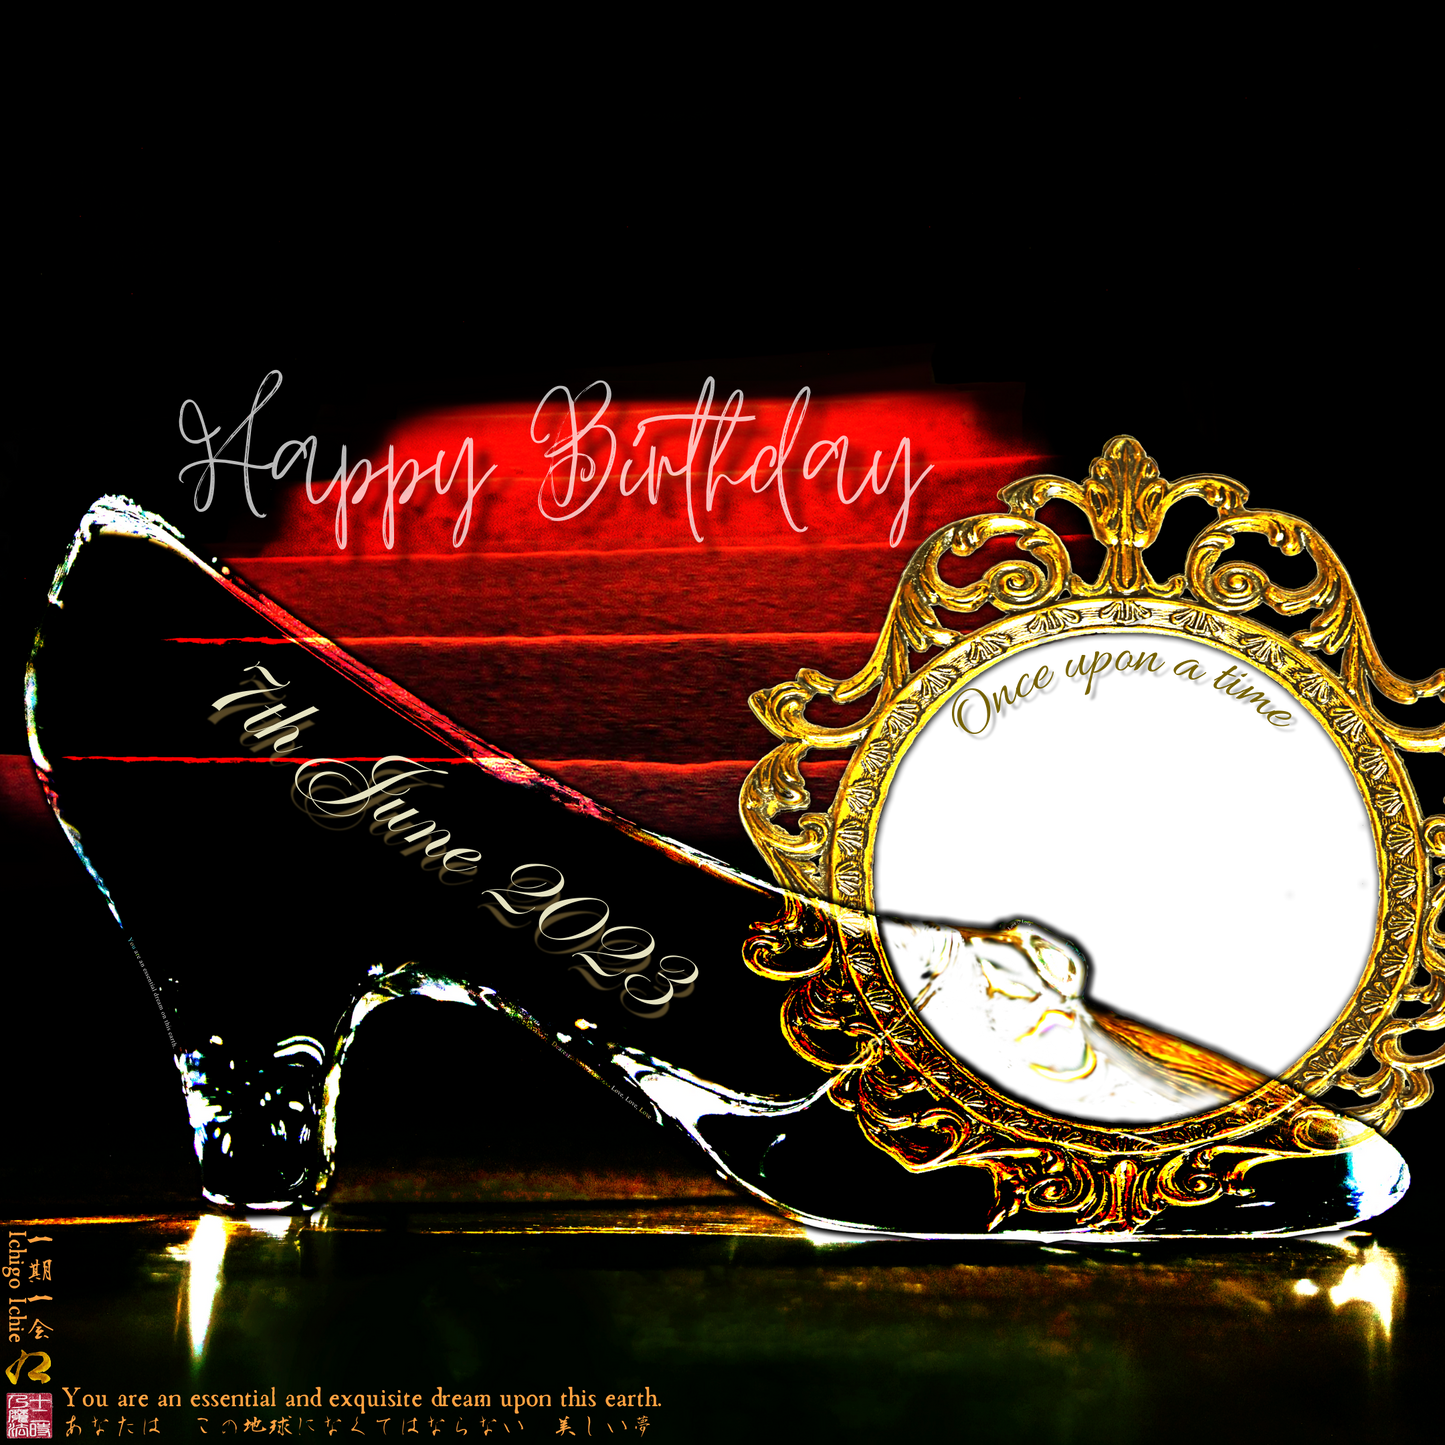 Happy Birthday Glass Slipper "Ichigo Ichie" 7th June 2023 the Right (1-of-1) NFT Art